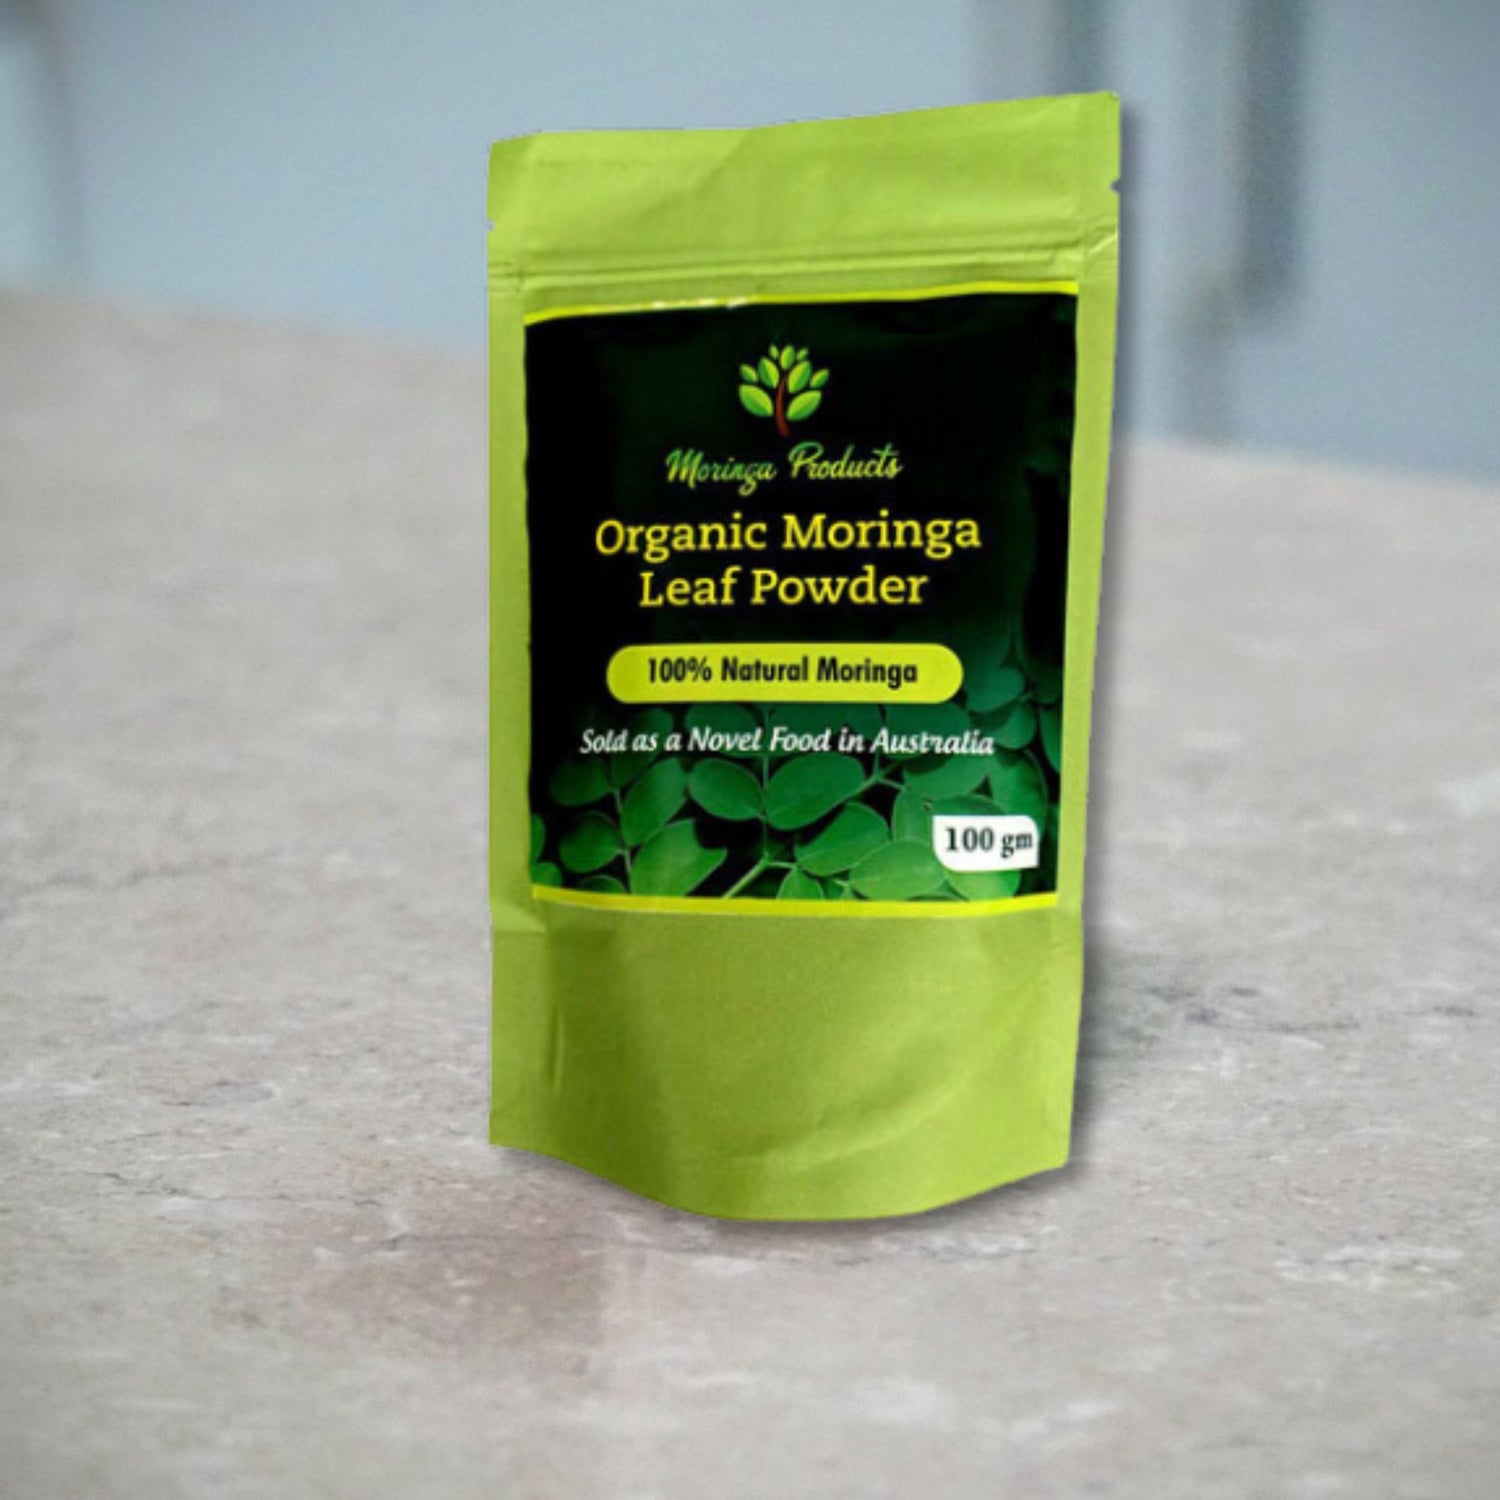 Organic Moringa Leaf Powder Australia | Moringa Products – MoringaProducts